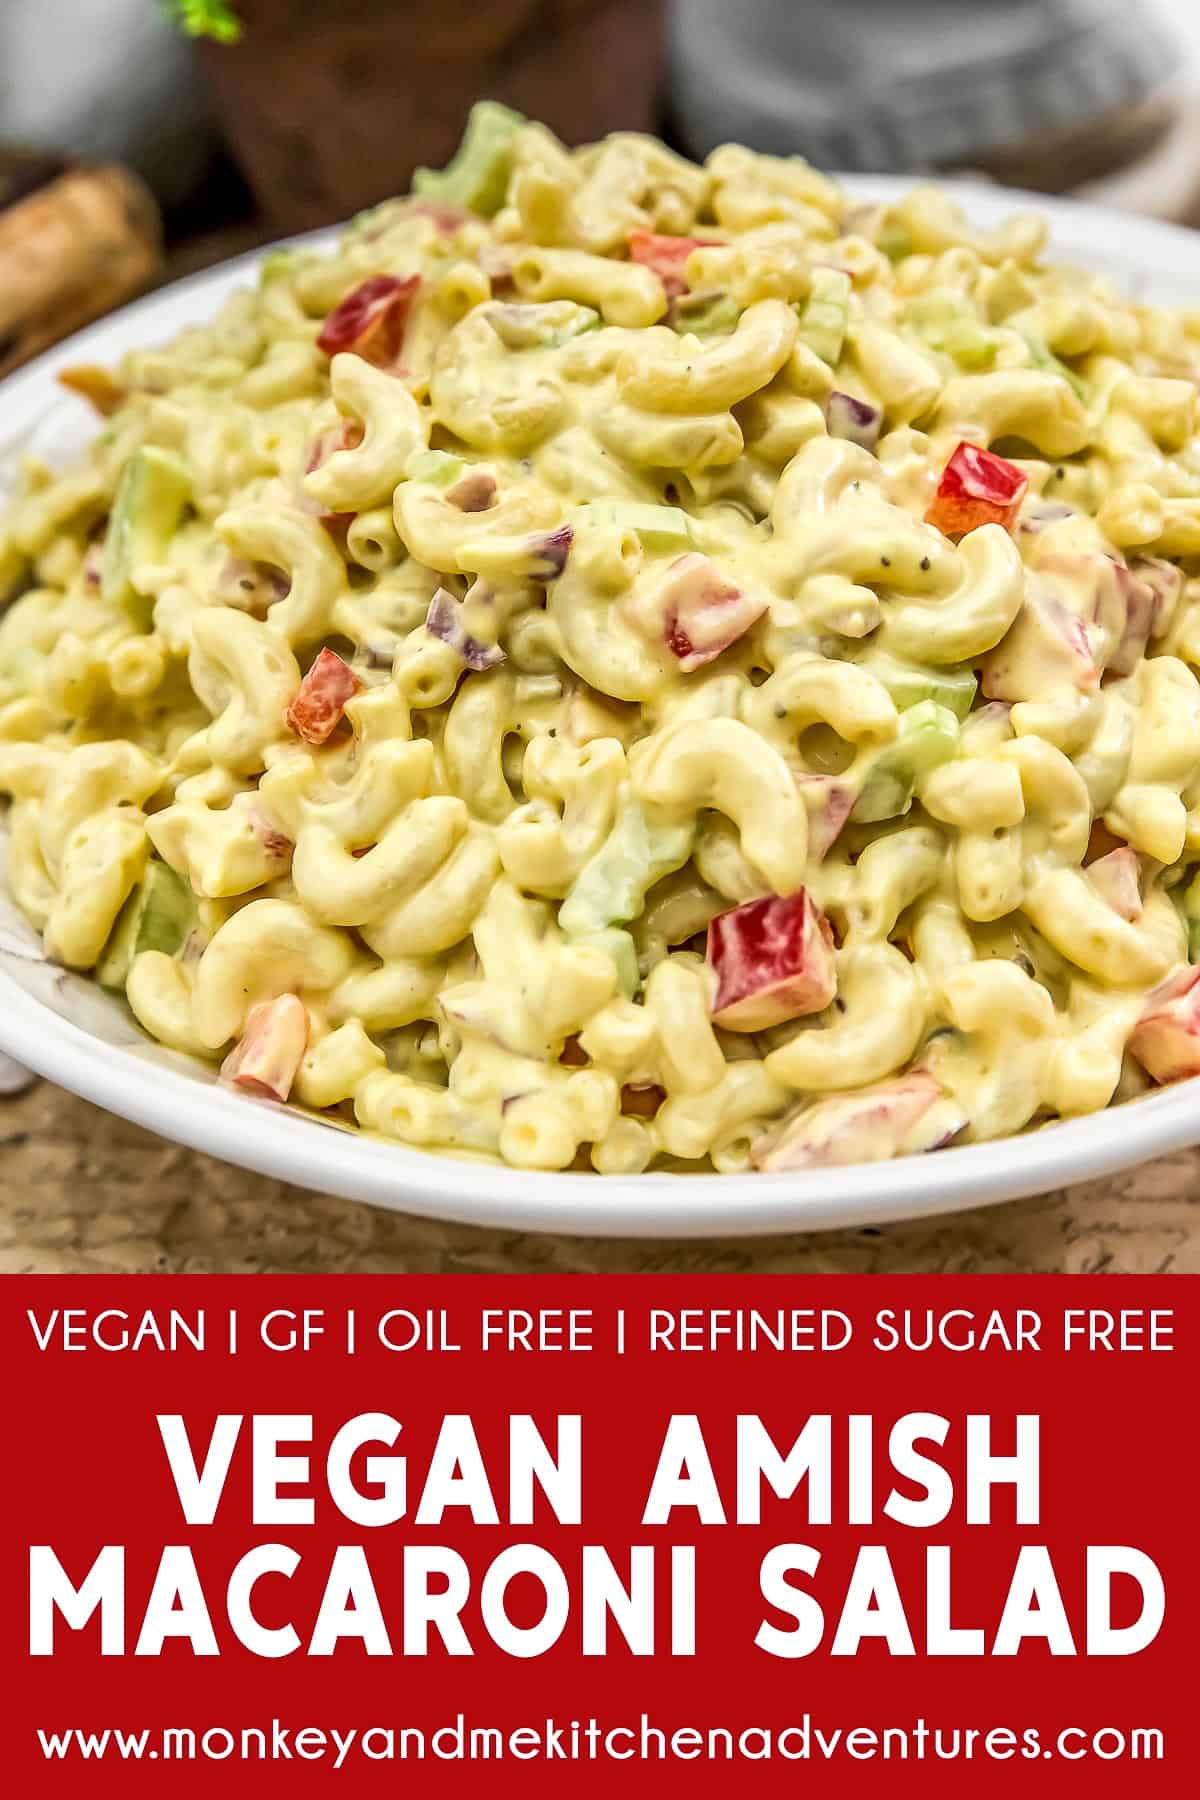 Vegan Amish Macaroni Salad with text description